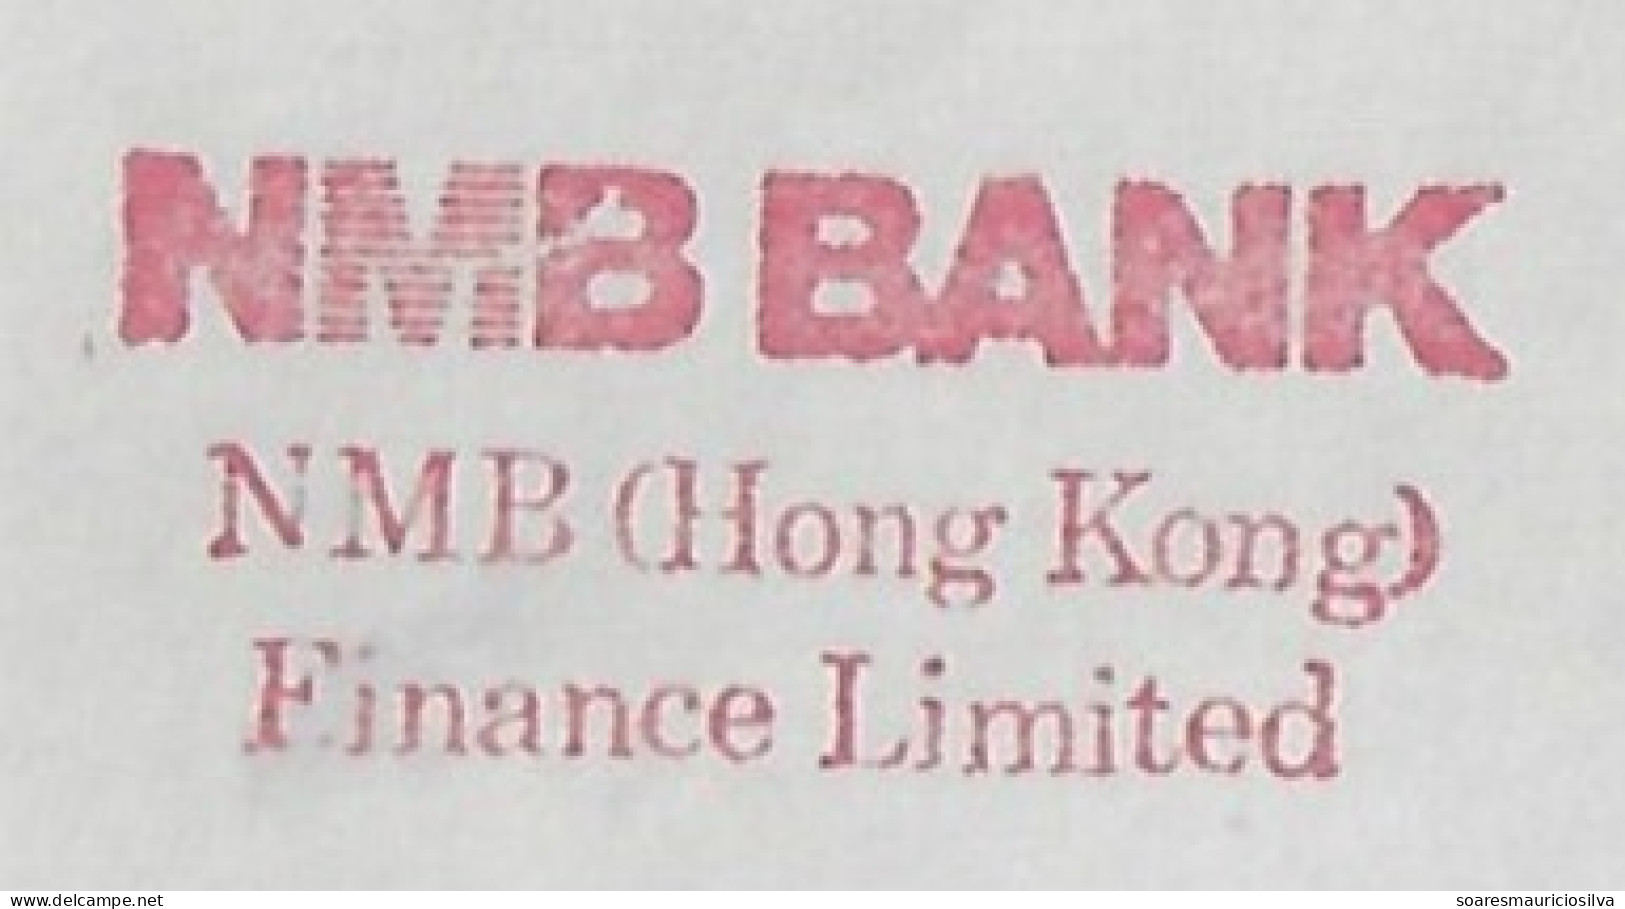 Hong Kong 1991 Cover Fragment Meter Stamp Pitney Bowes-GB “6300” Series Slogan NMB Bank - Cartas & Documentos